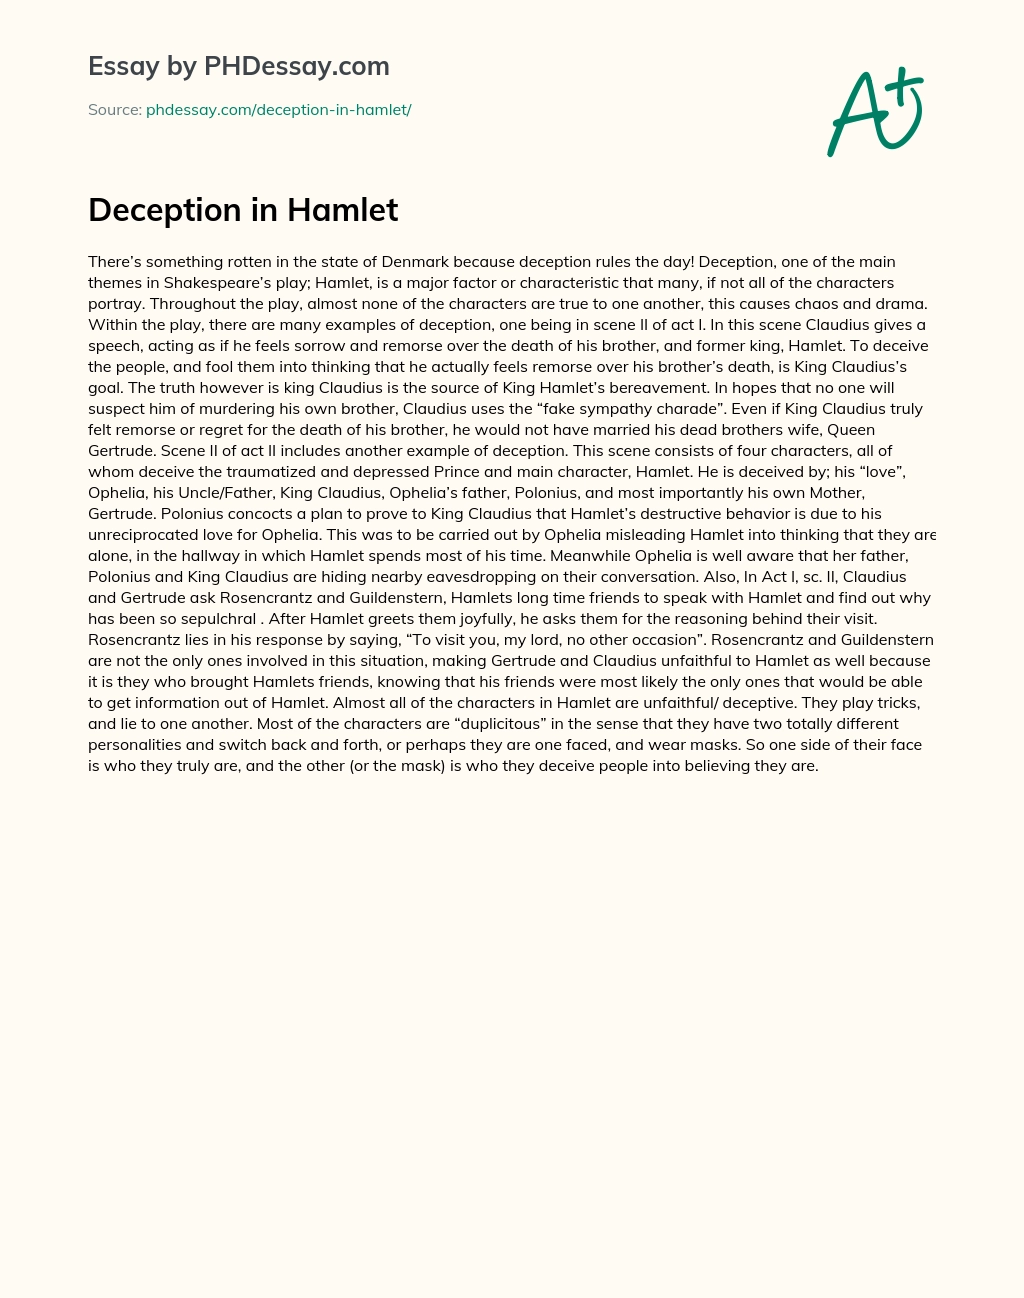 Deception in Hamlet essay